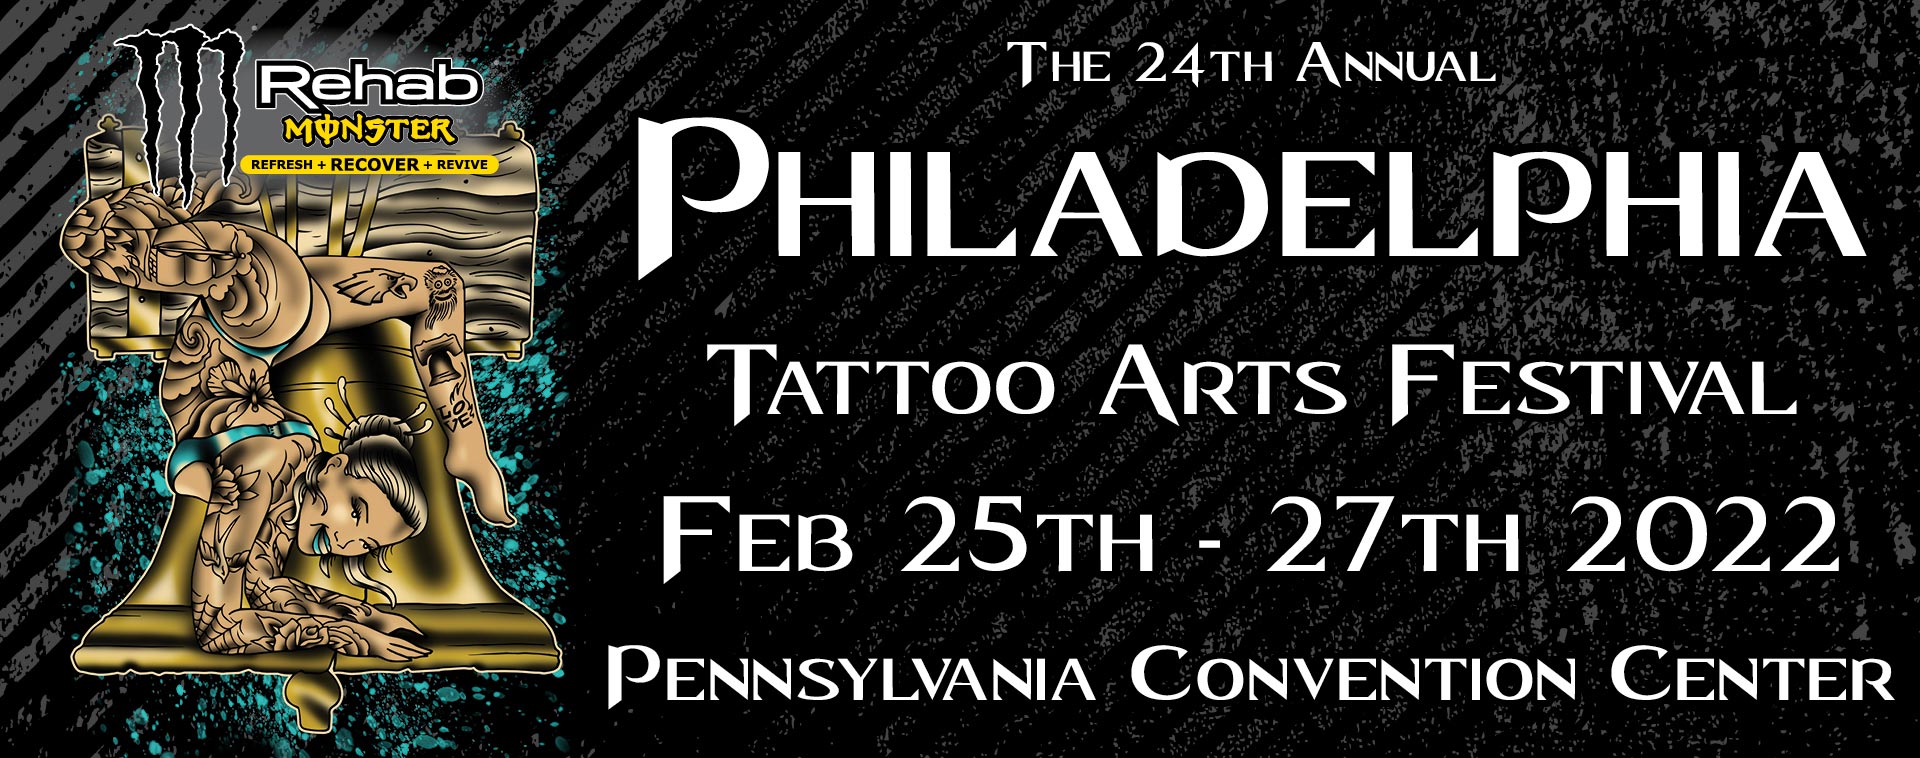 Cleveland Tattoo Festival 2022  YouTube